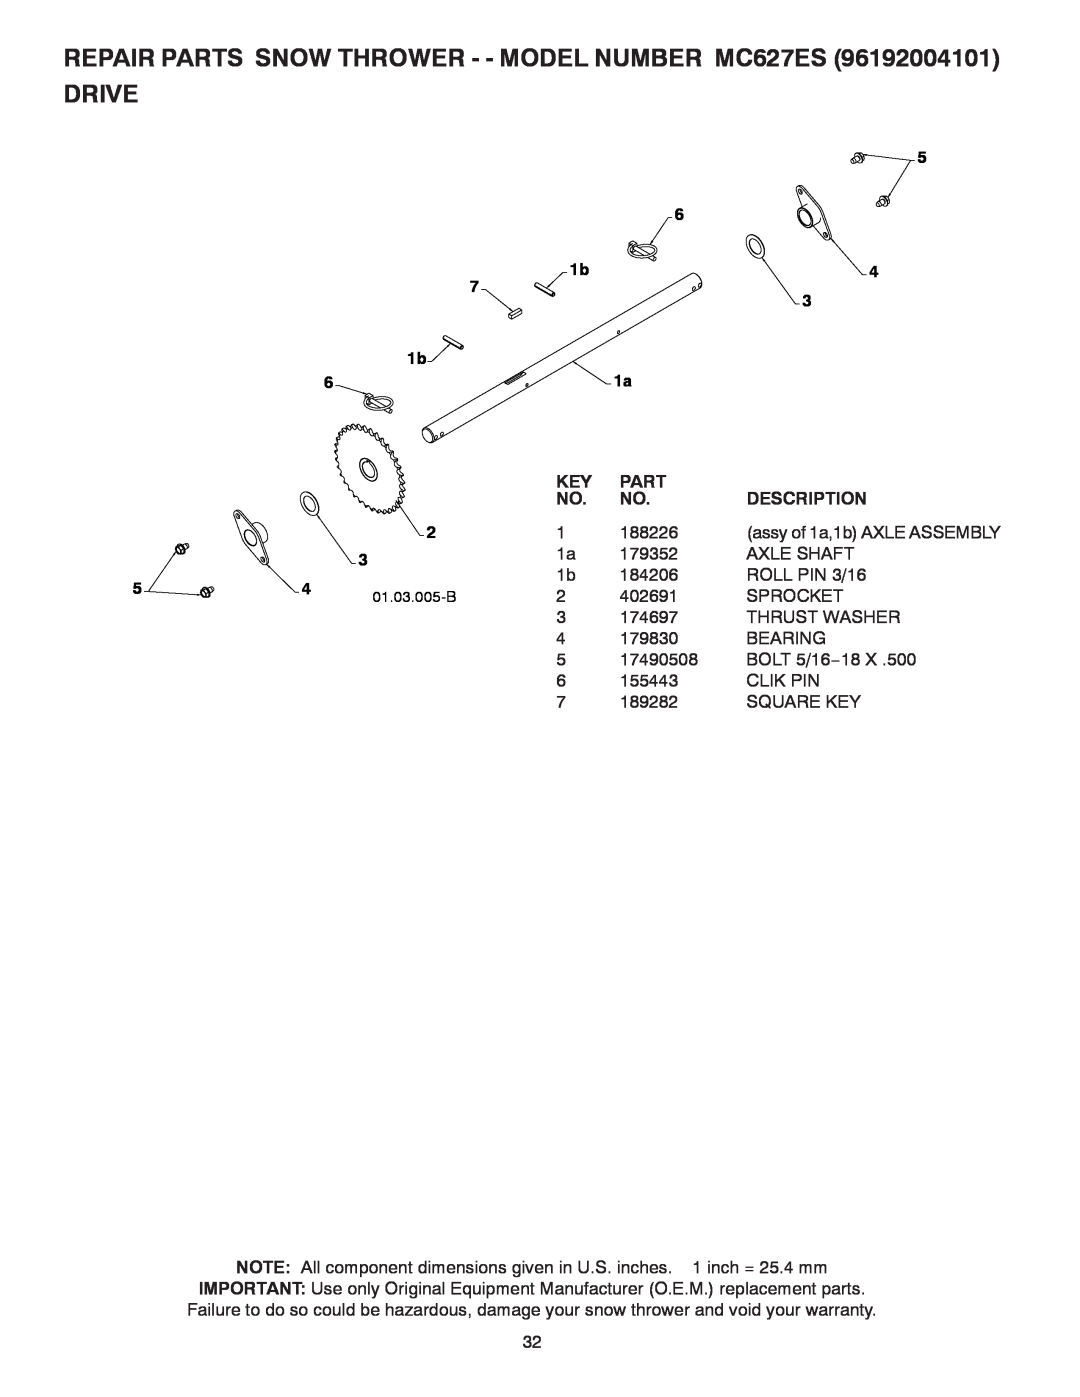 McCulloch 96192004101 owner manual REPAIR PARTS SNOW THROWER - - MODEL NUMBER MC627ES DRIVE, Part, Description, 01.03.005-B 